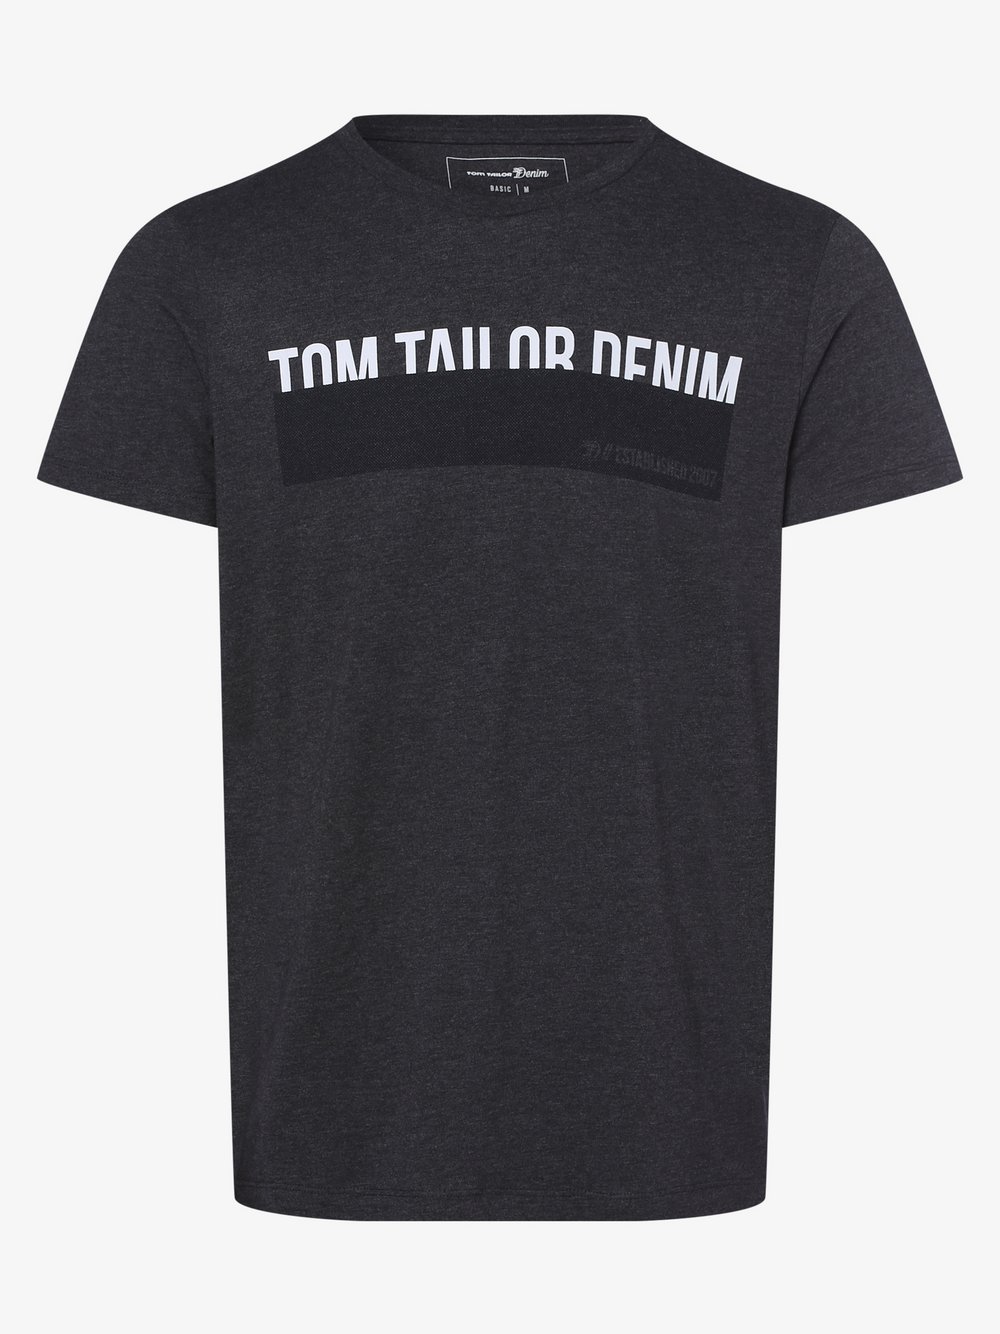 Tom Tailor Denim - T-shirt męski, szary